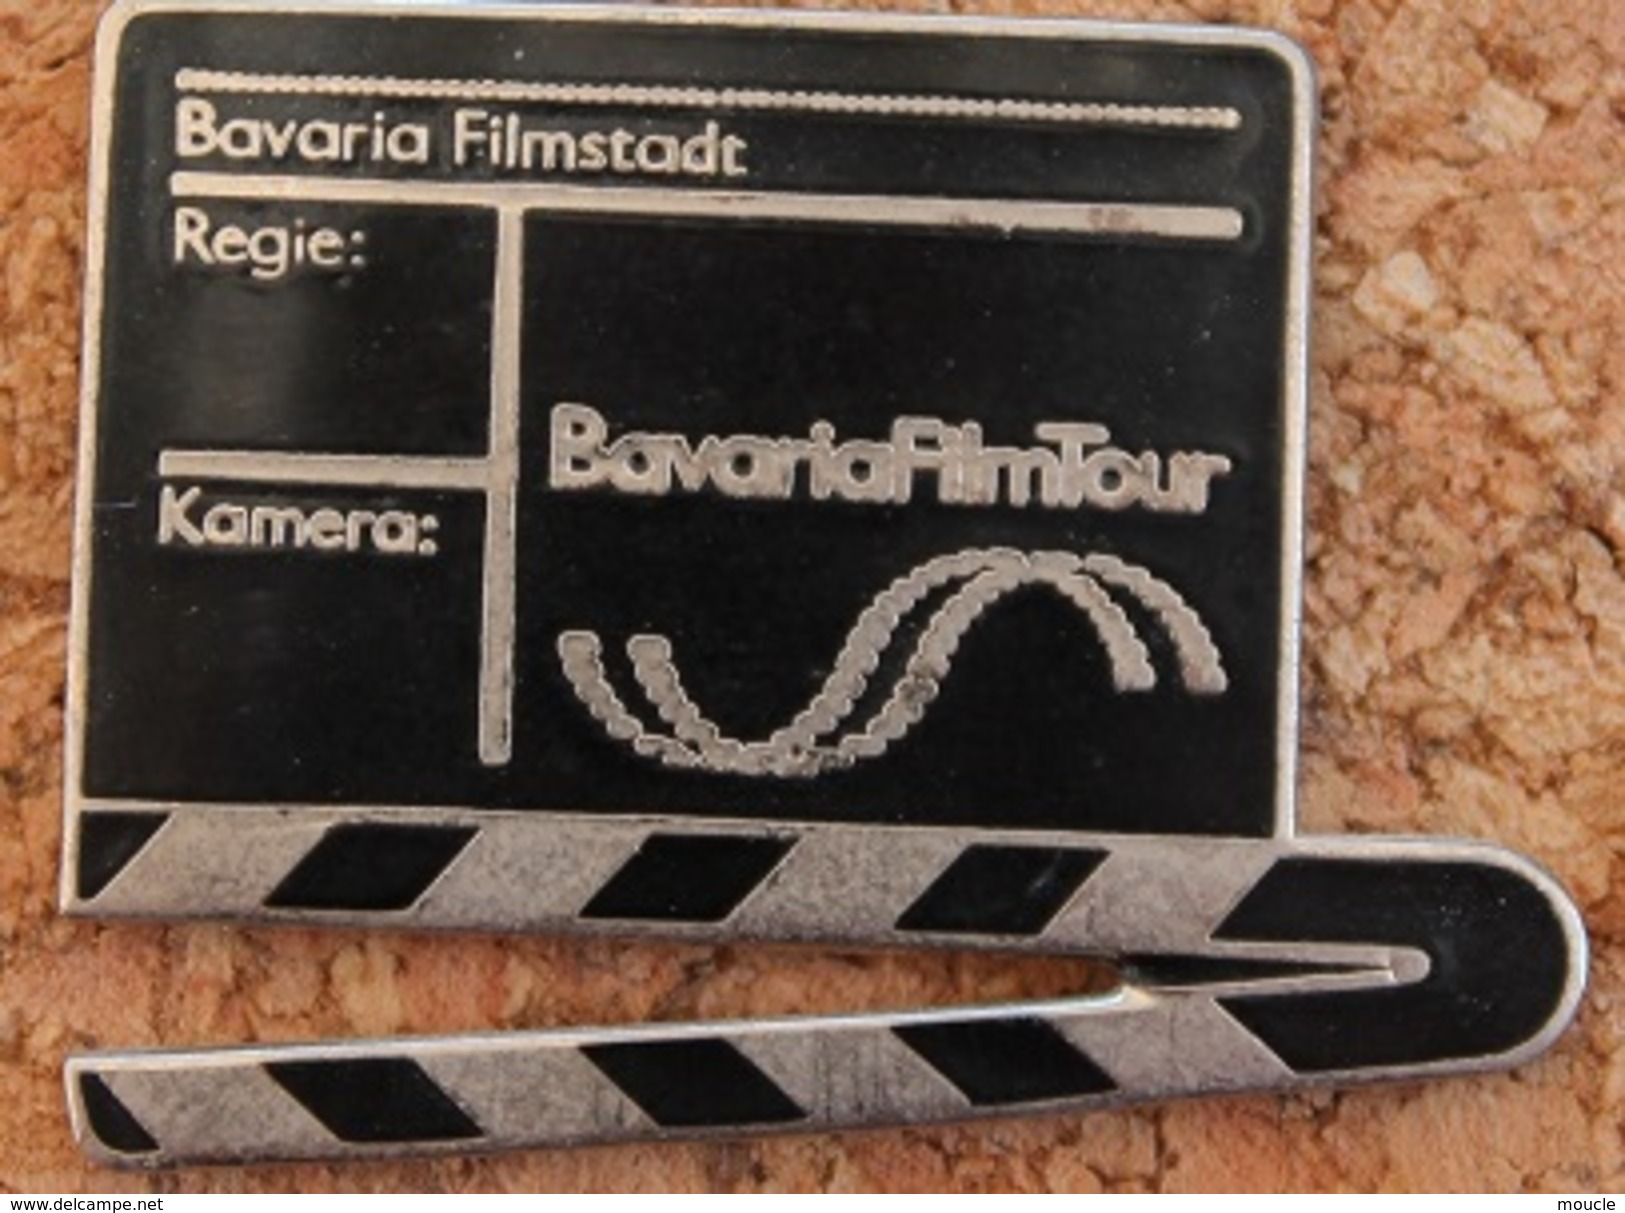 CLAP DE FILM - BAVARIAFILMTOUR - BAVARIA FILMSTADT - REGIE - KAMERA -     (16) - Filmmanie